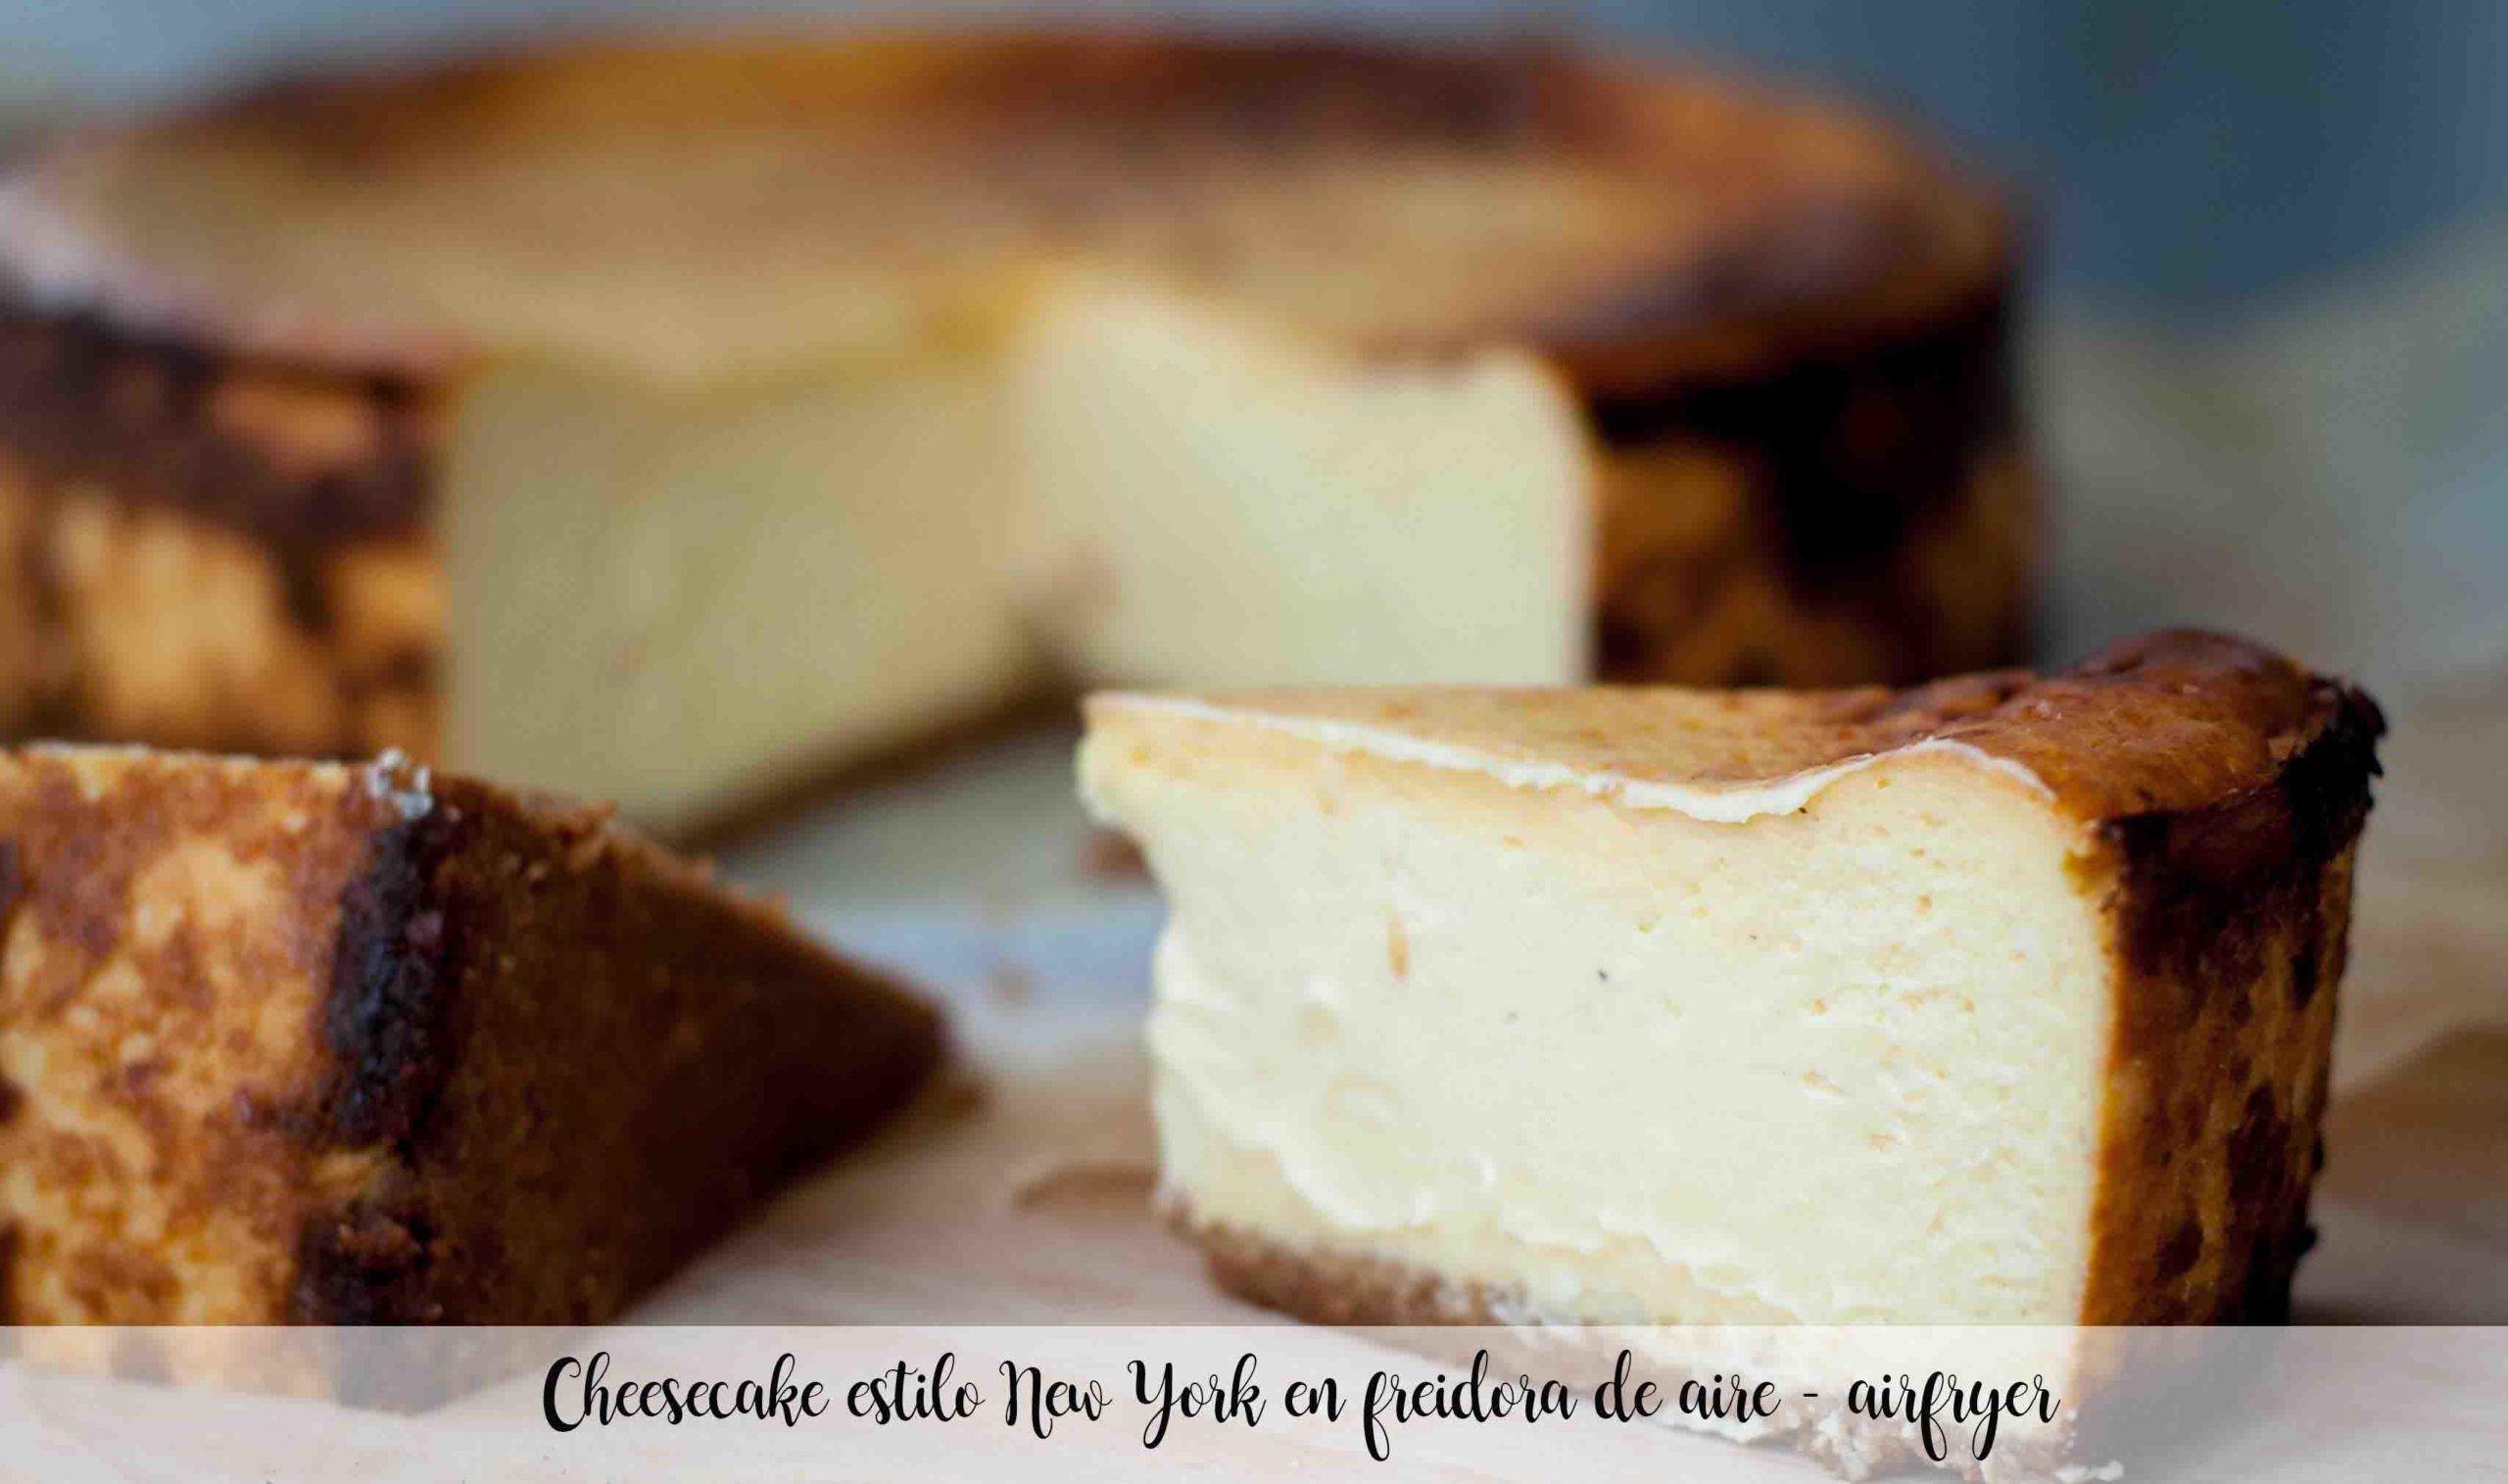 New York style cheesecake in air fryer – airfryer